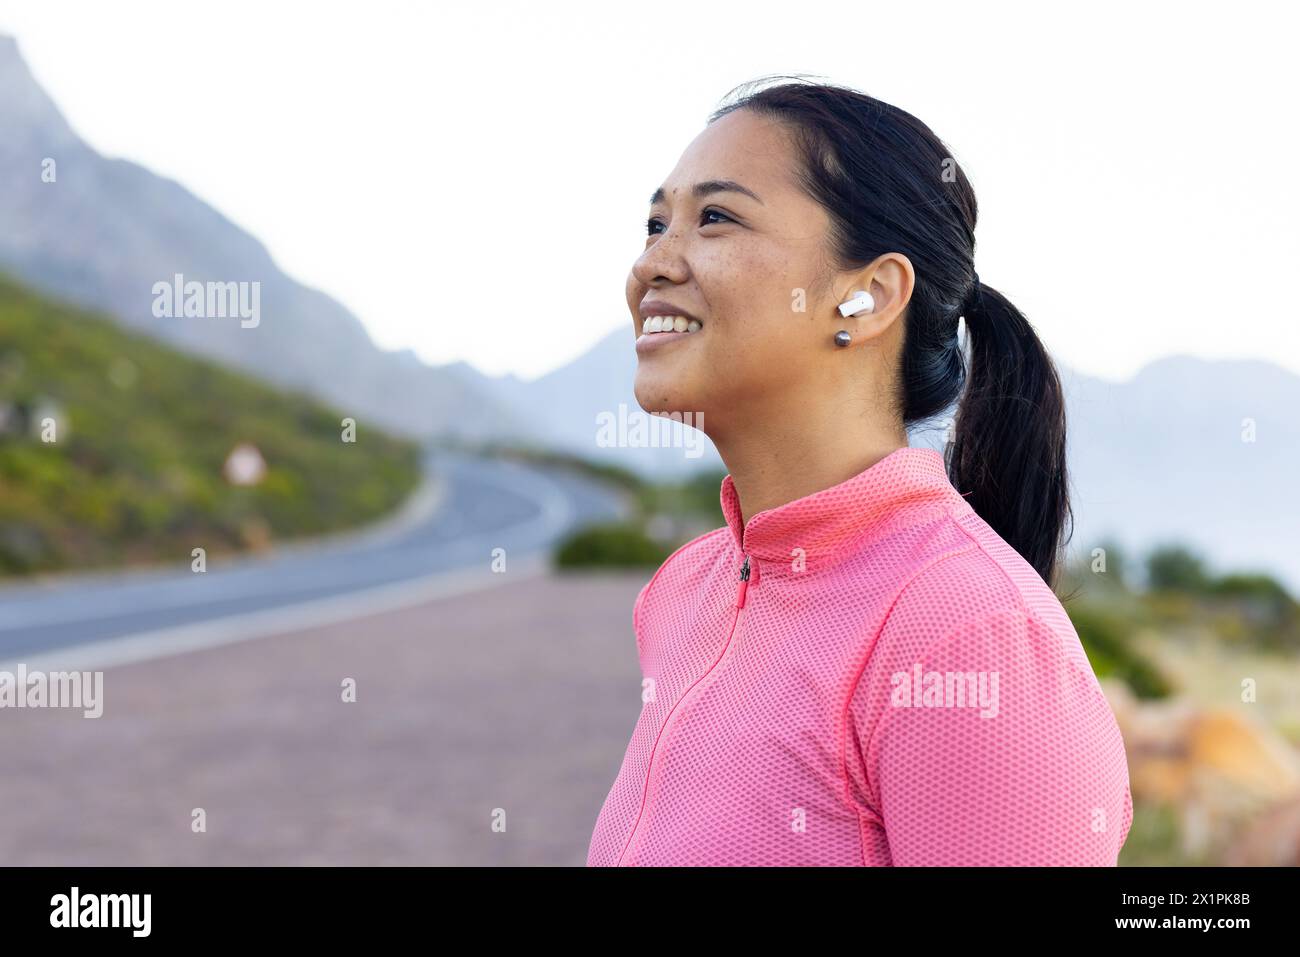 A biracial female hiker wearing earphones is enjoying nature, copy space Stock Photo